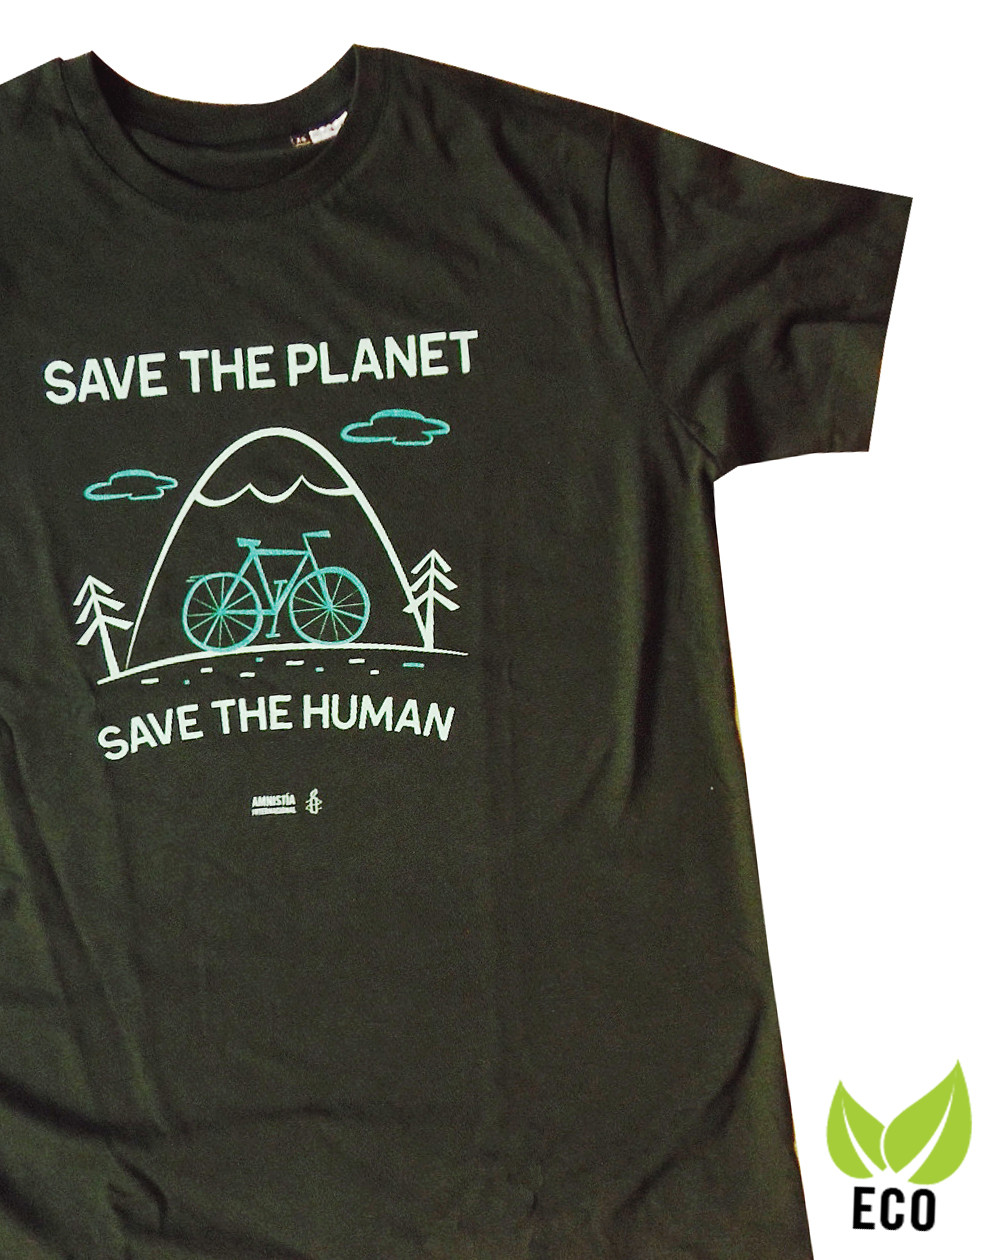 Camiseta Save the planet verde unisex